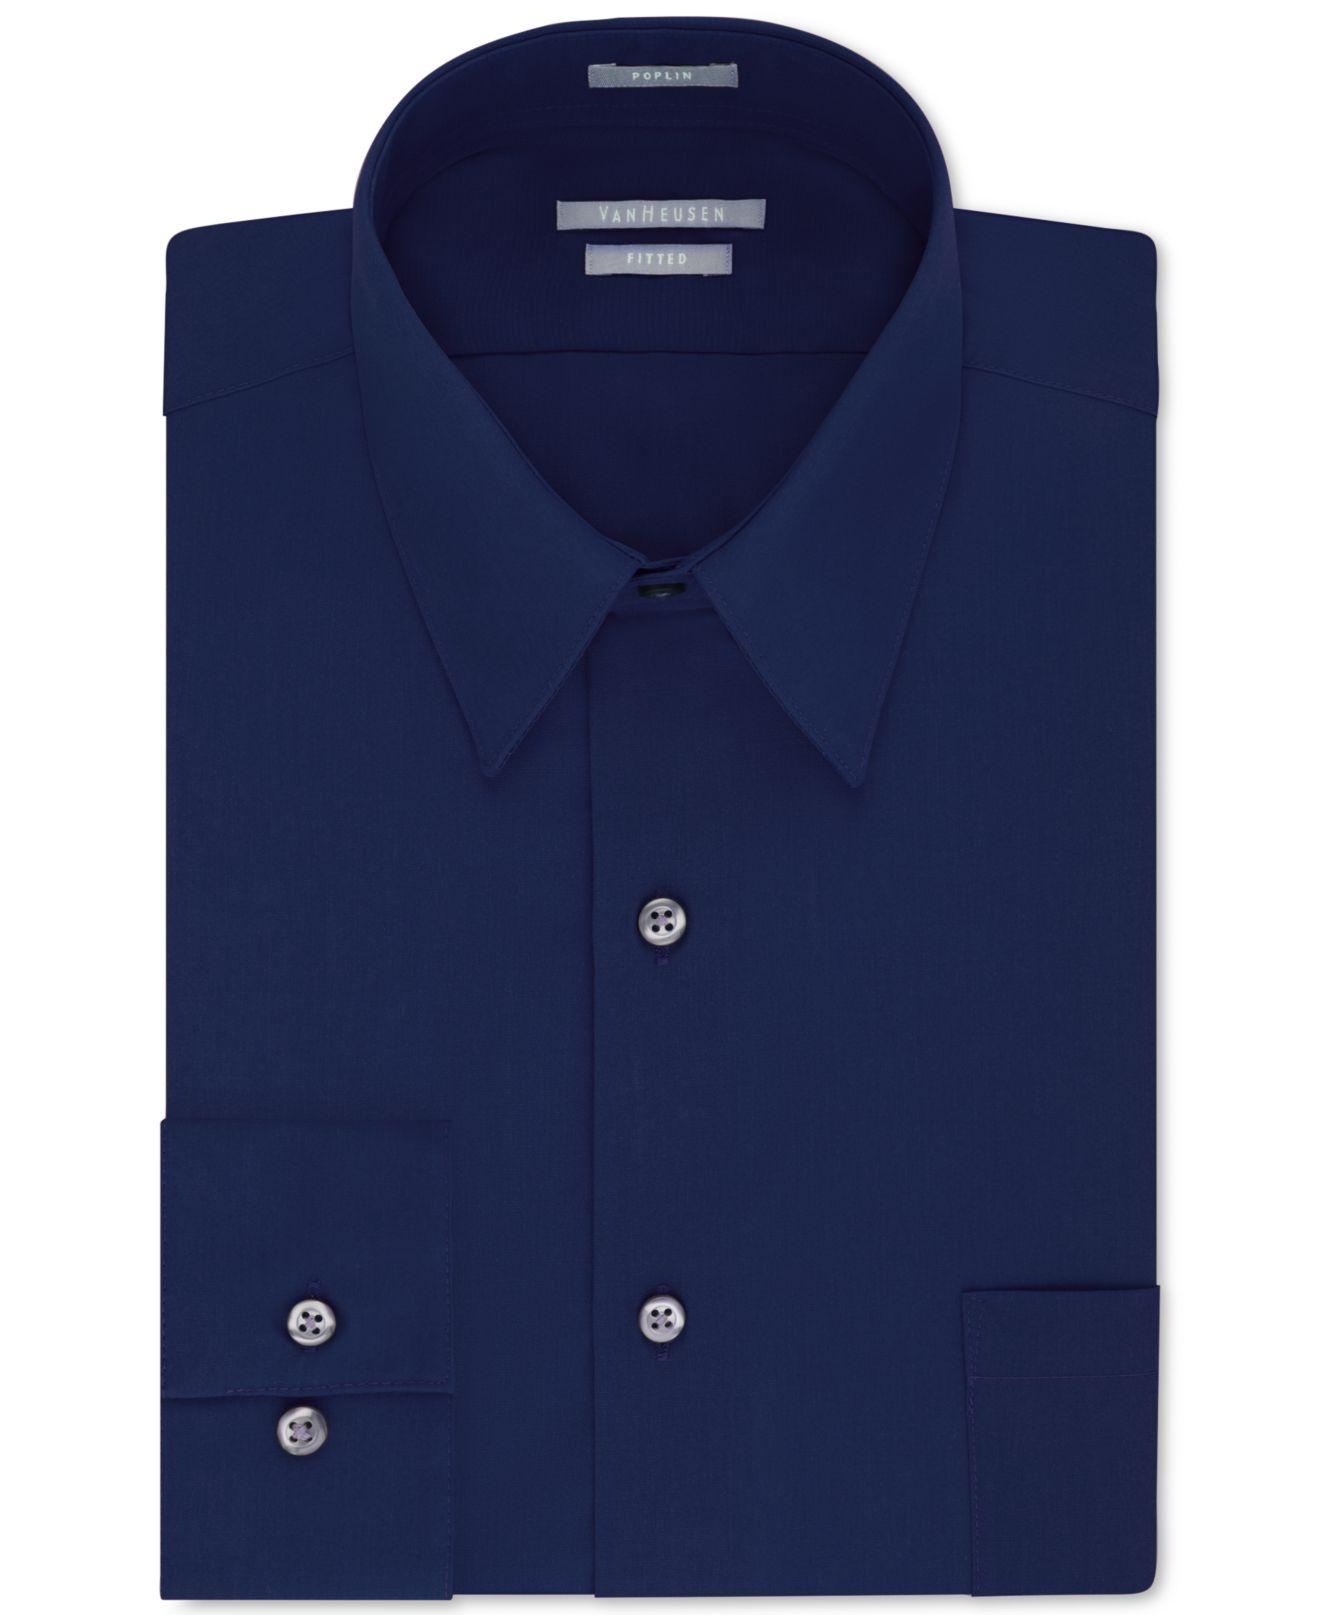 Van Heusen Cotton Athletic Fit Poplin Dress Shirt in Blue for Men - Lyst